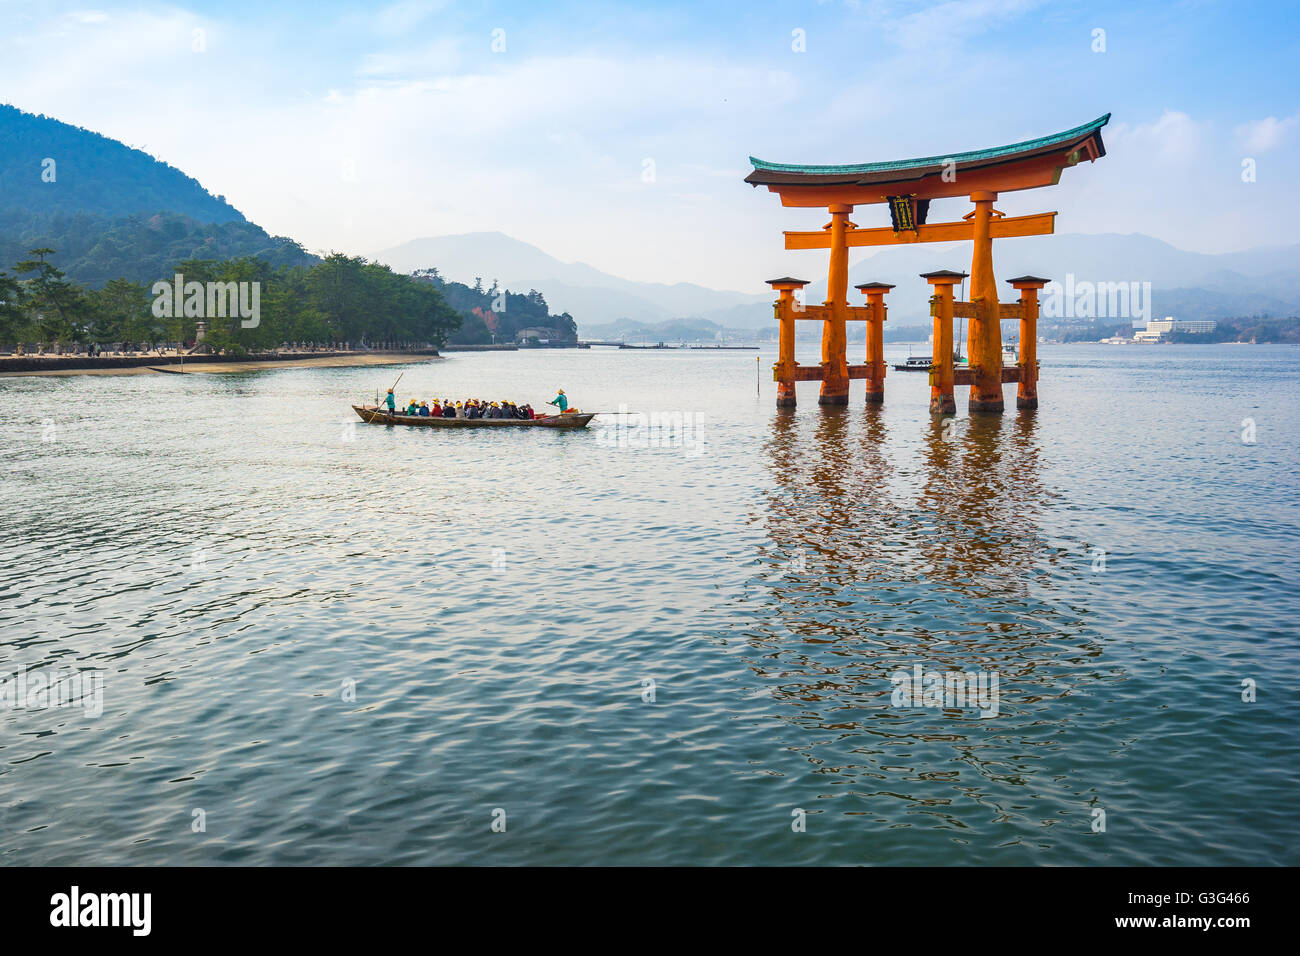 The Floating Torii gate in Miyajima, Japan. Stock Photo